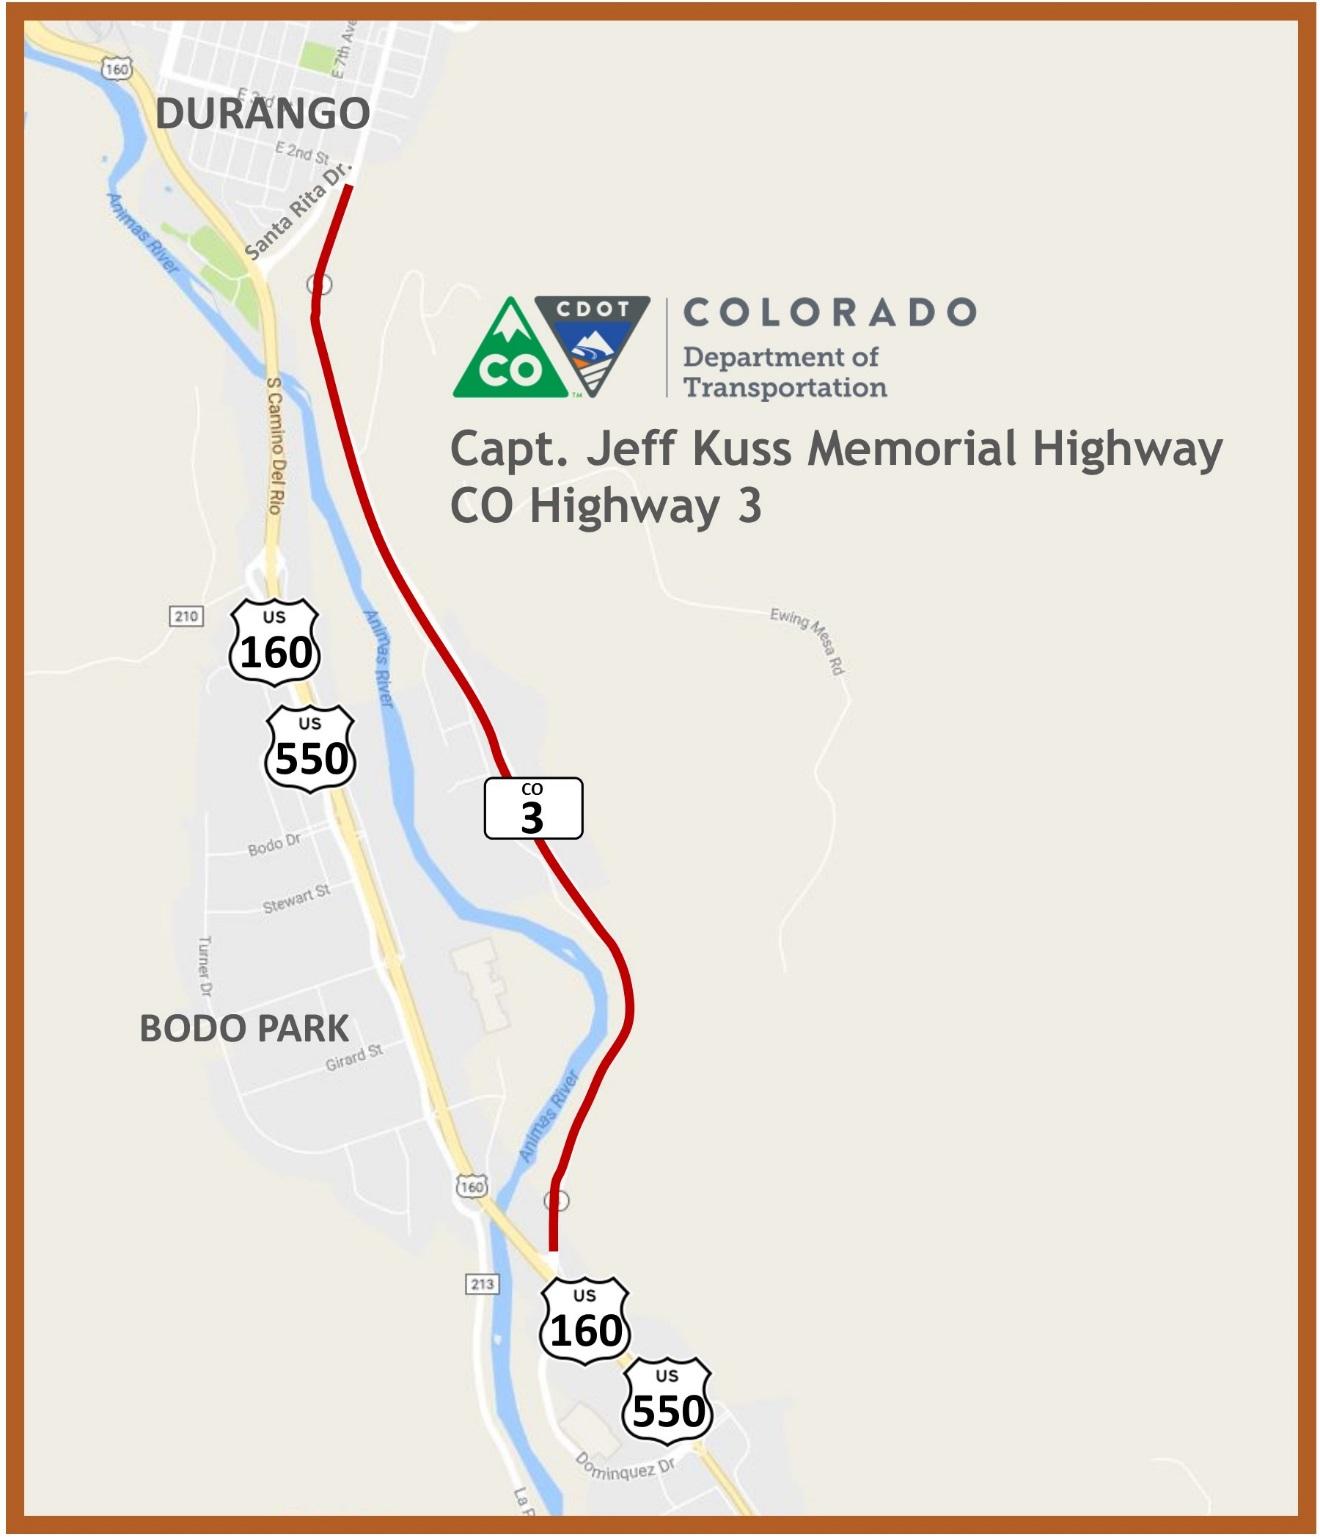 CO Highway 3 location.jpg detail image